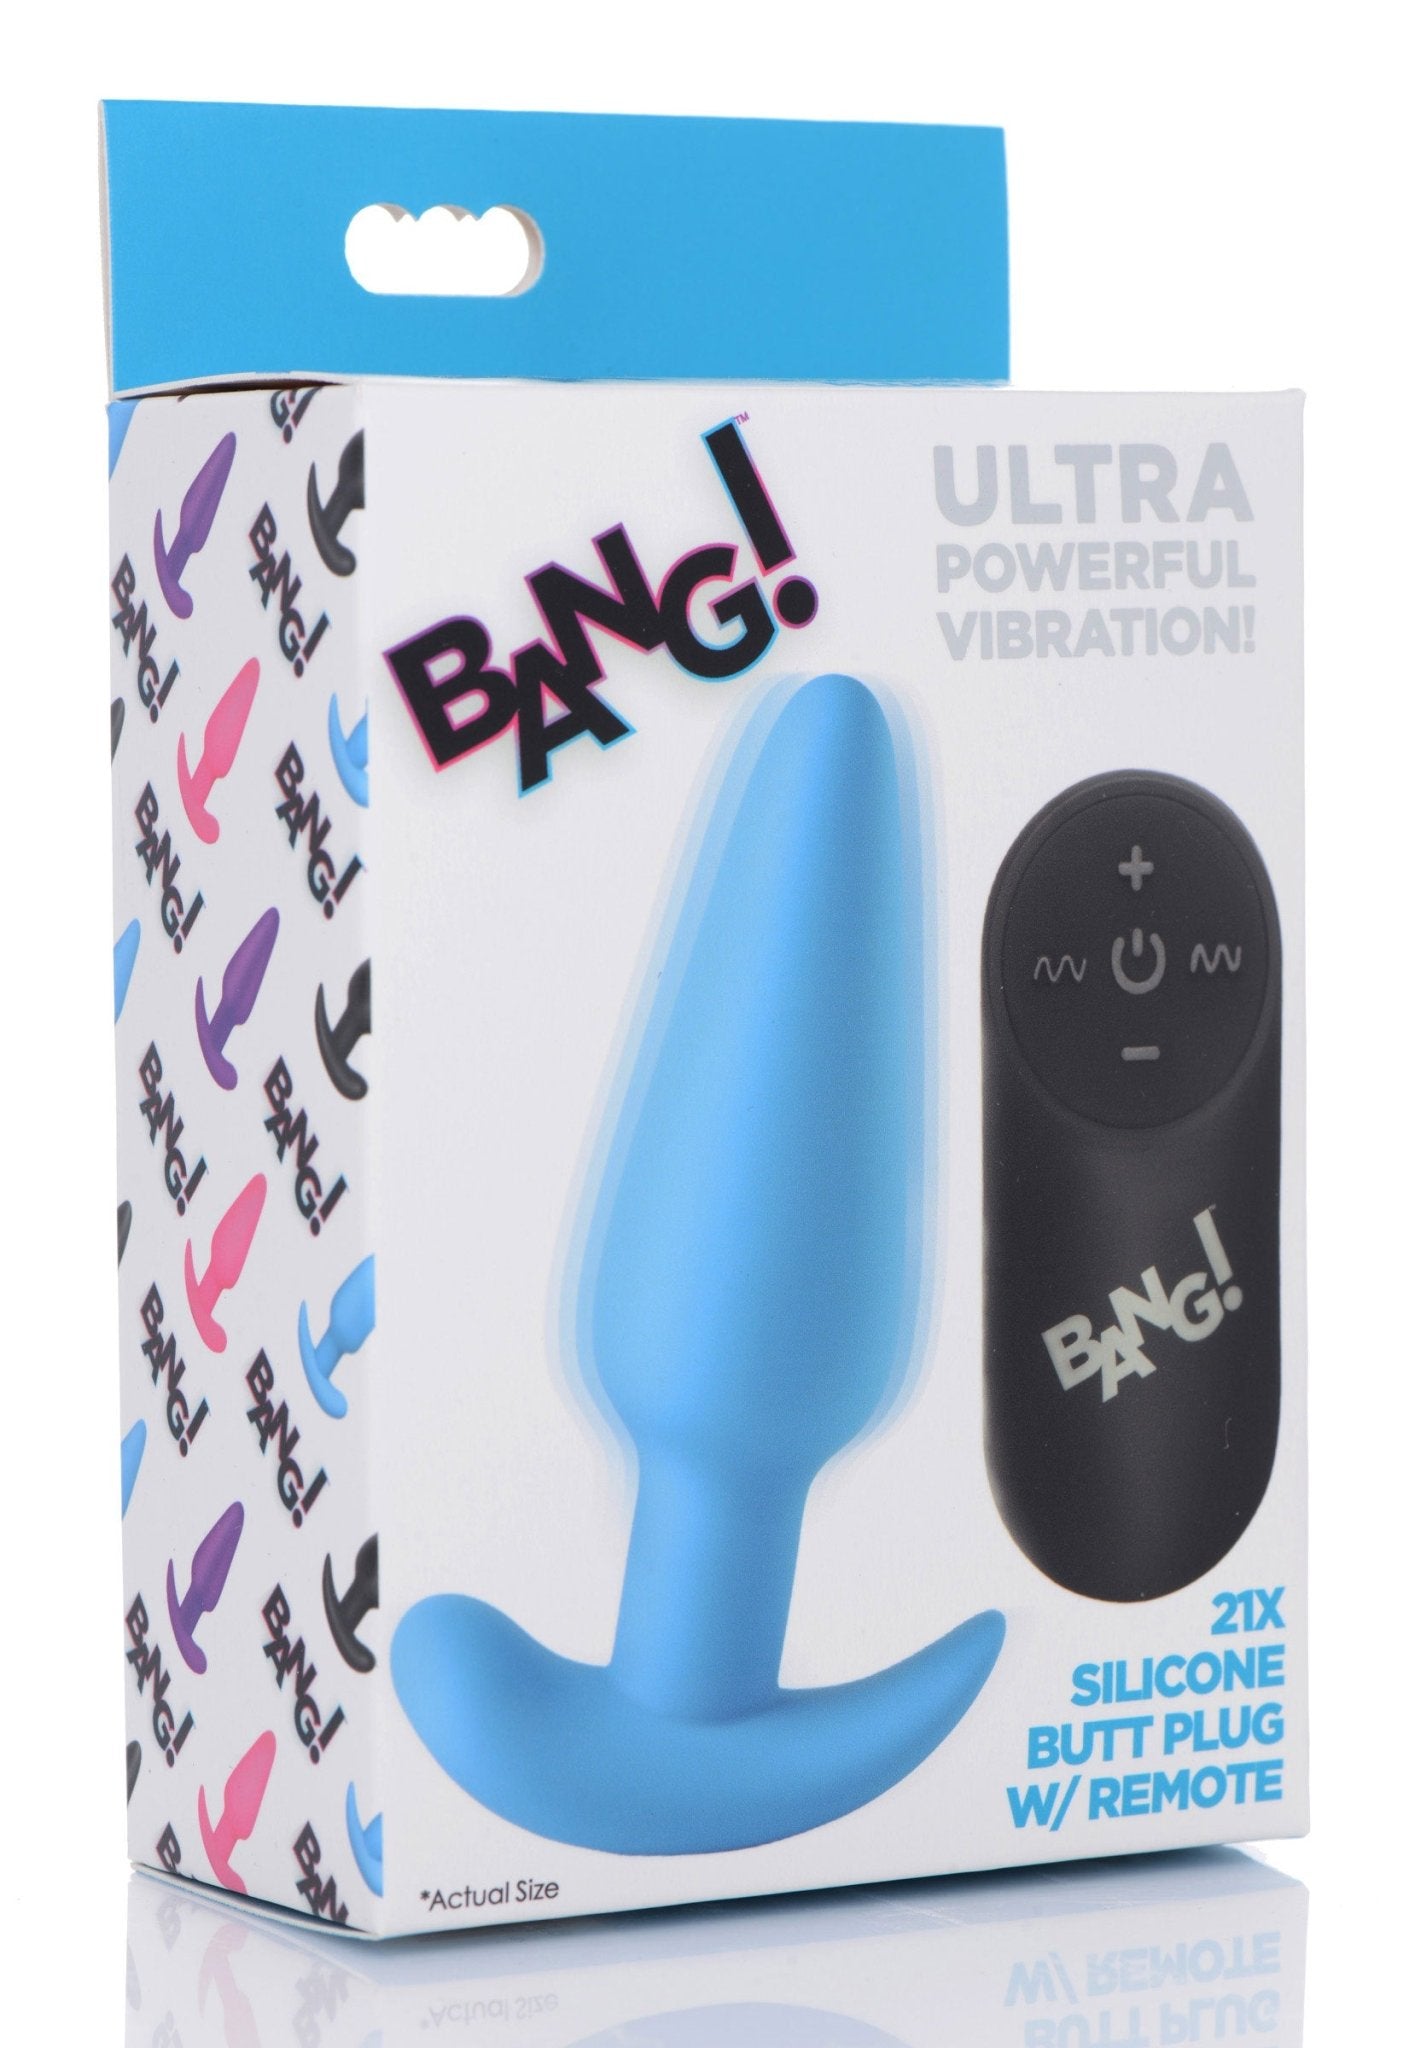 Bang! 21x Vibrating Silicone Butt Plug W/ Remote